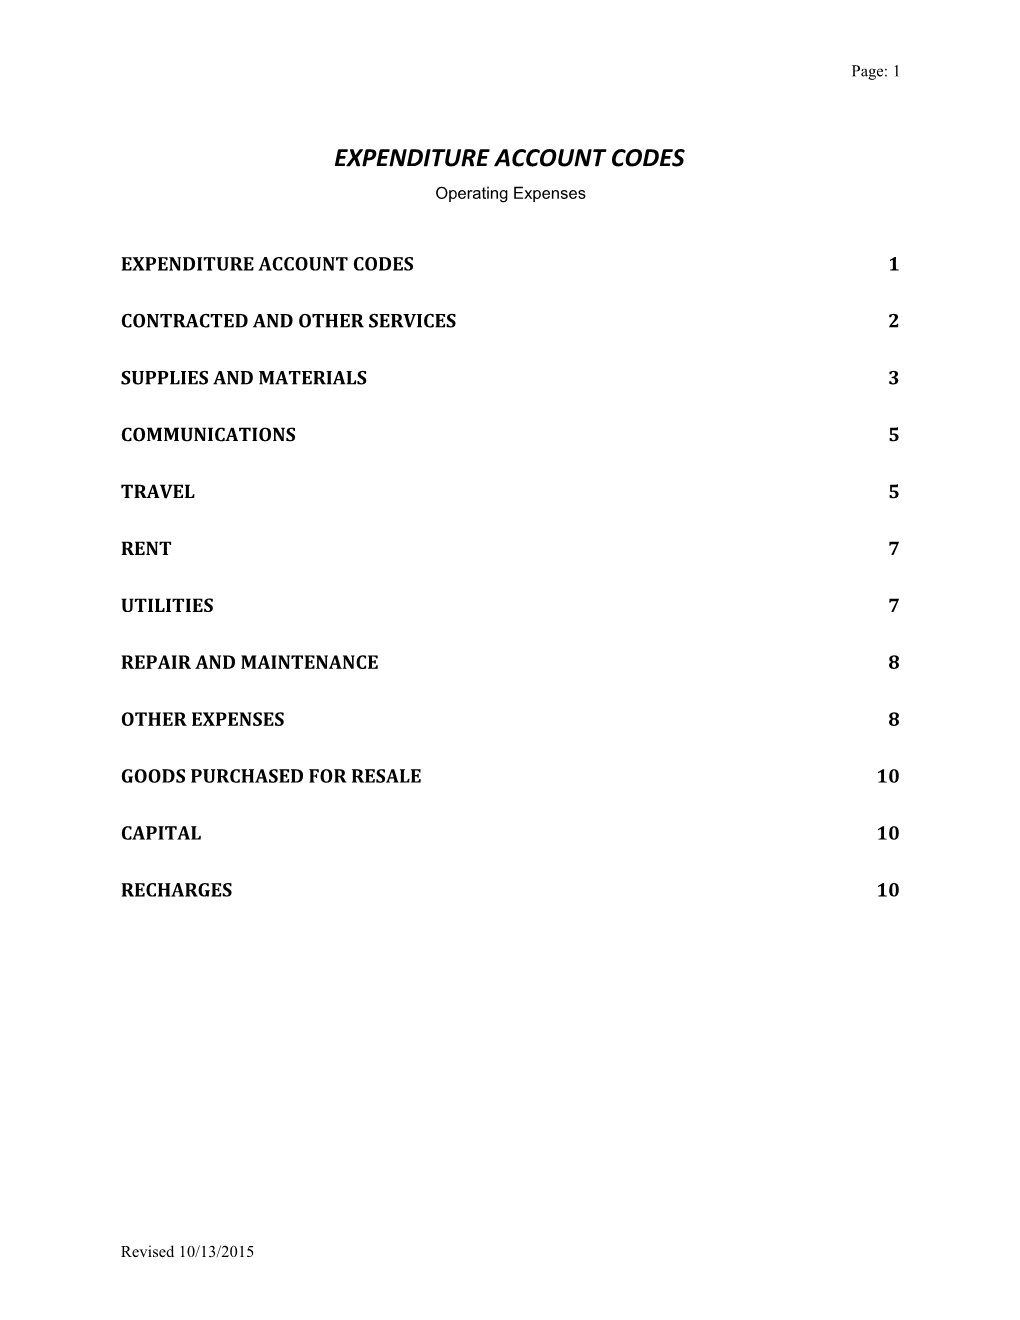 Expenditure Account Codes